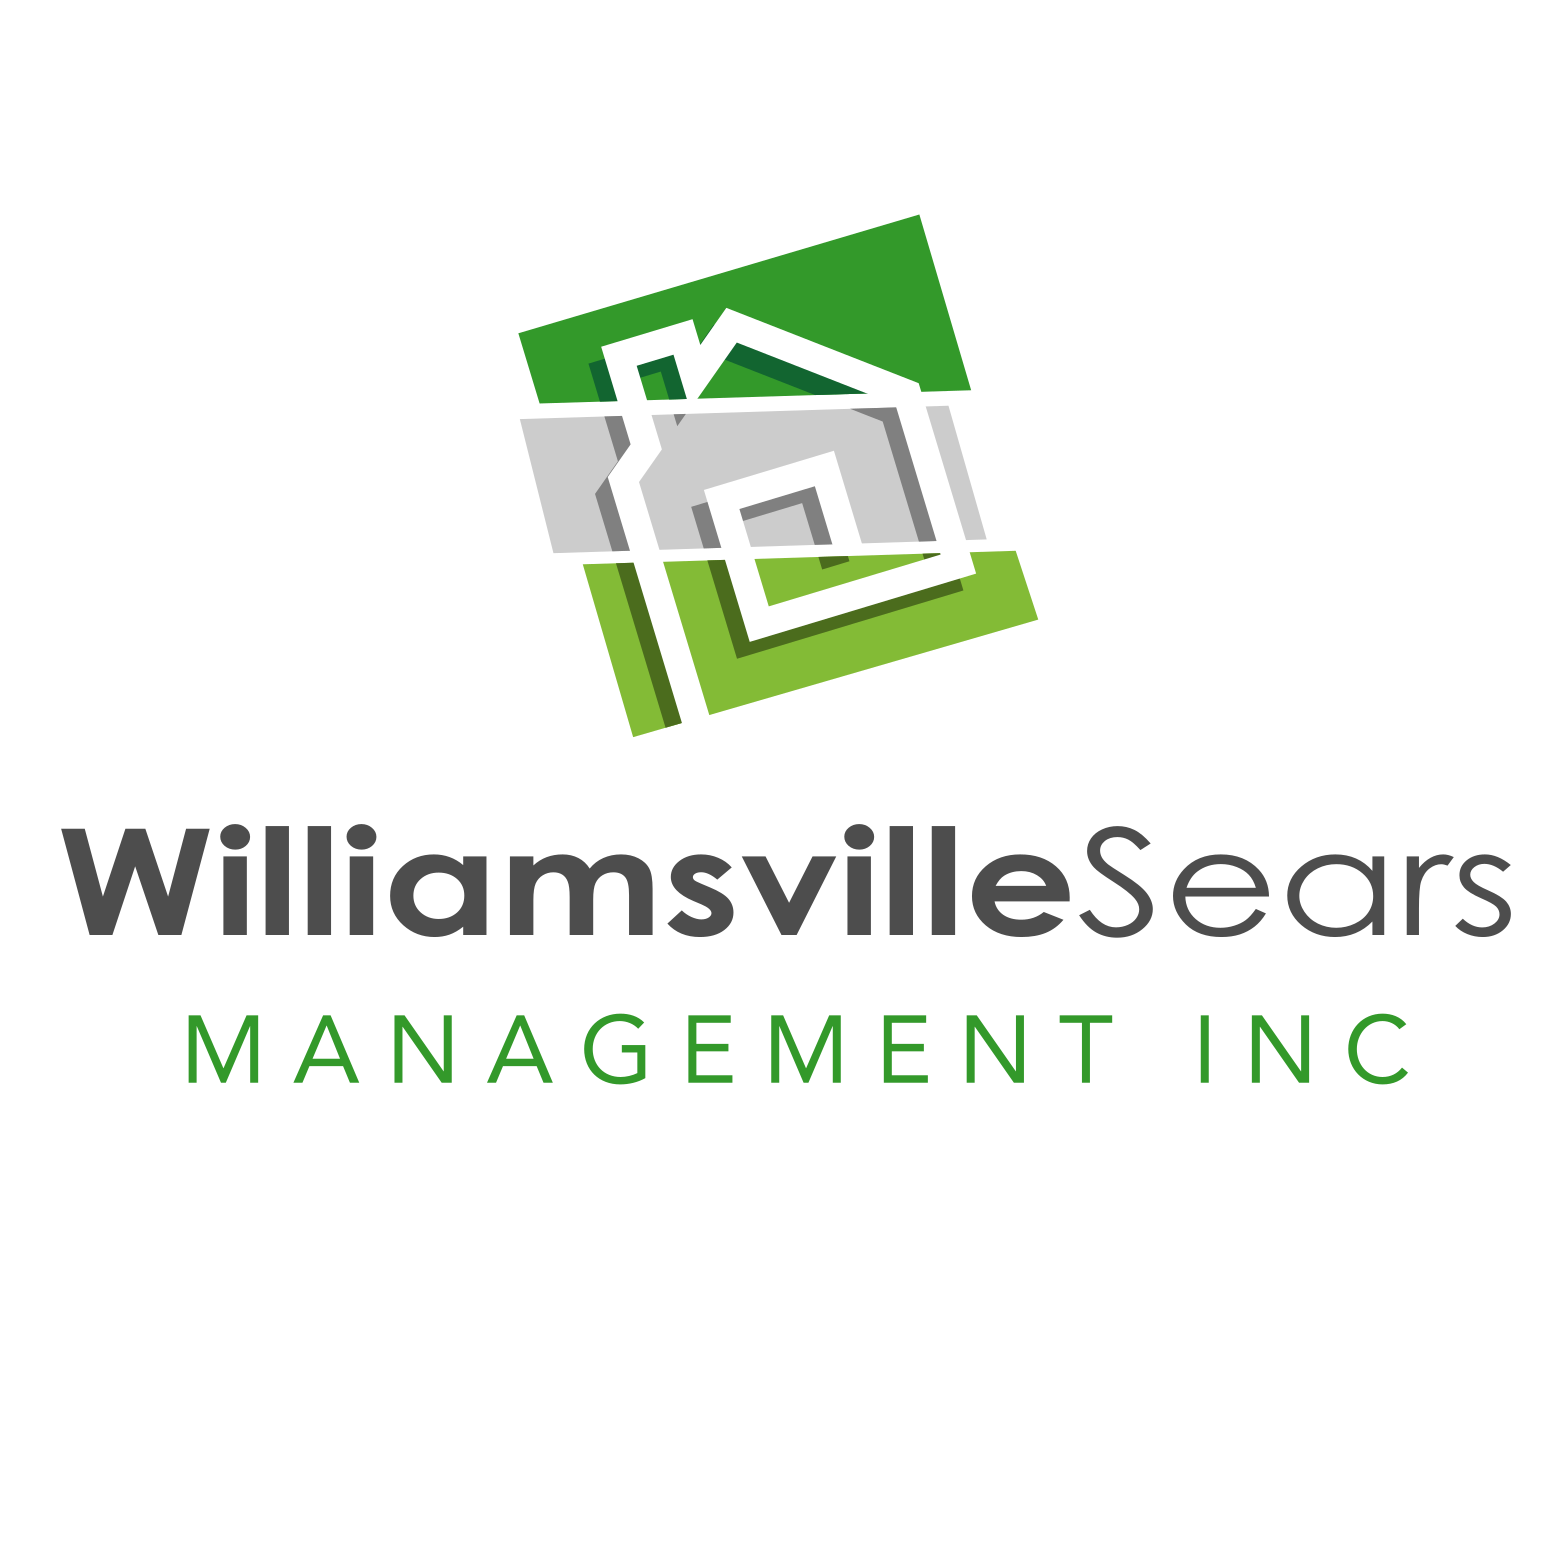 Williamsville Sears 